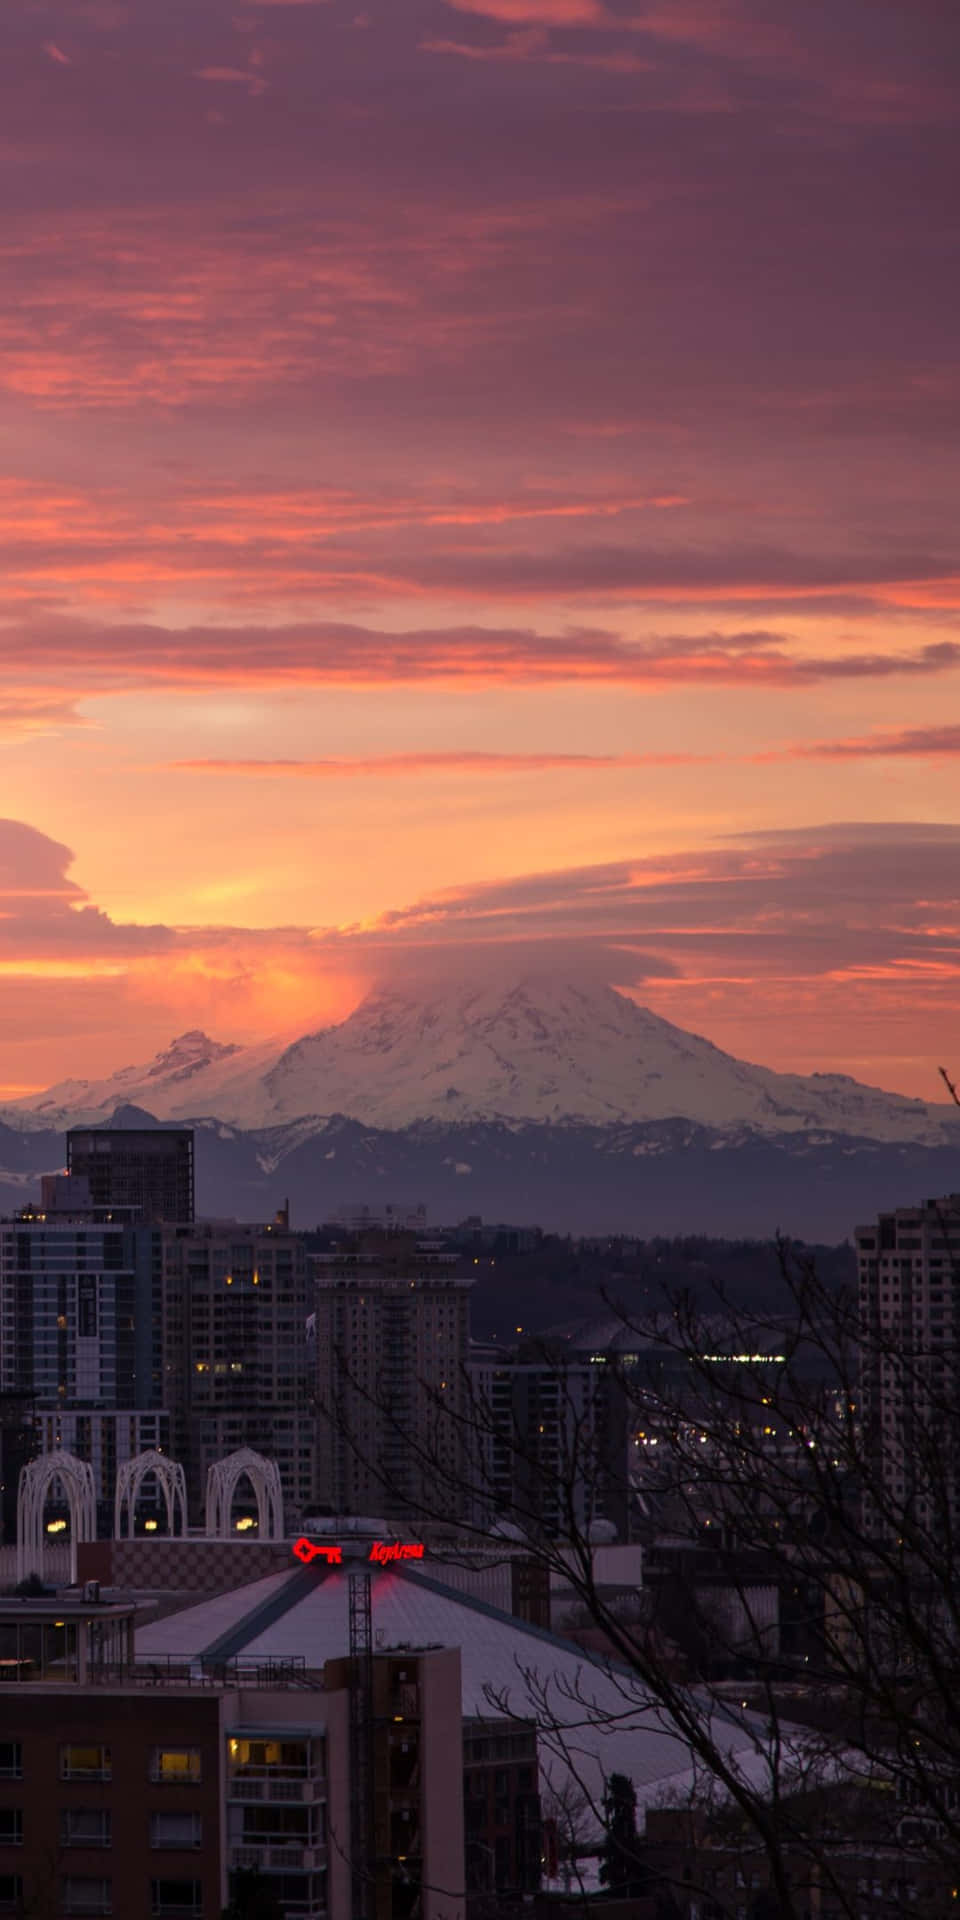 The beautiful skyline of Seattle, taken by the Google Pixel 3.